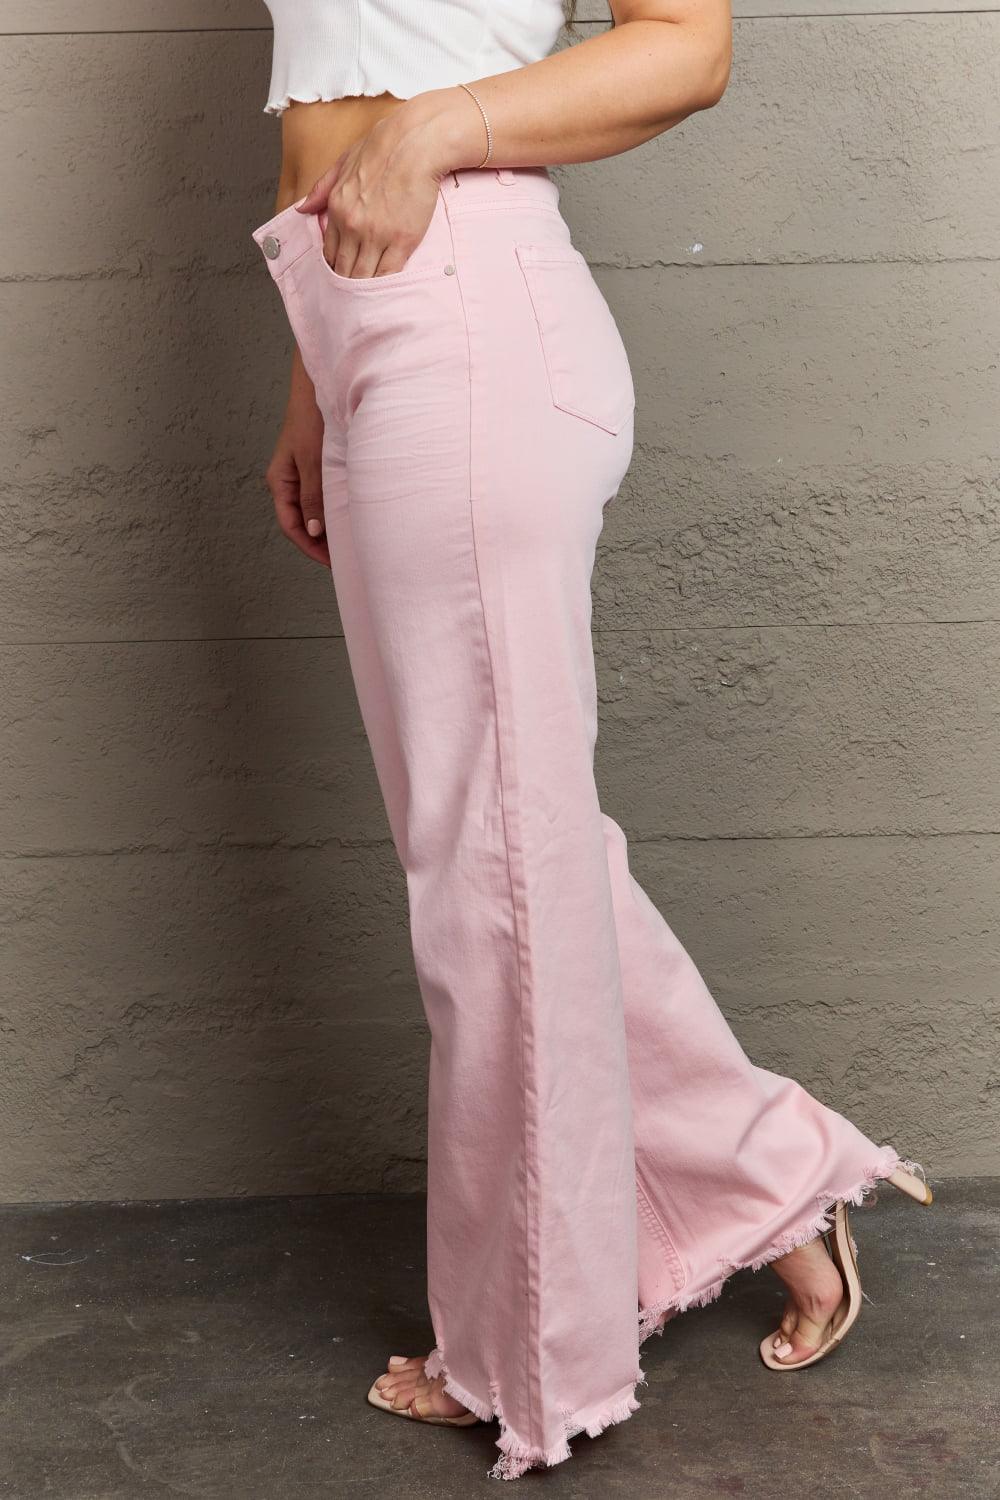 RISEN Raelene Full Size High Waist Wide Leg Jeans in Light Pink - Lab Fashion, Home & Health